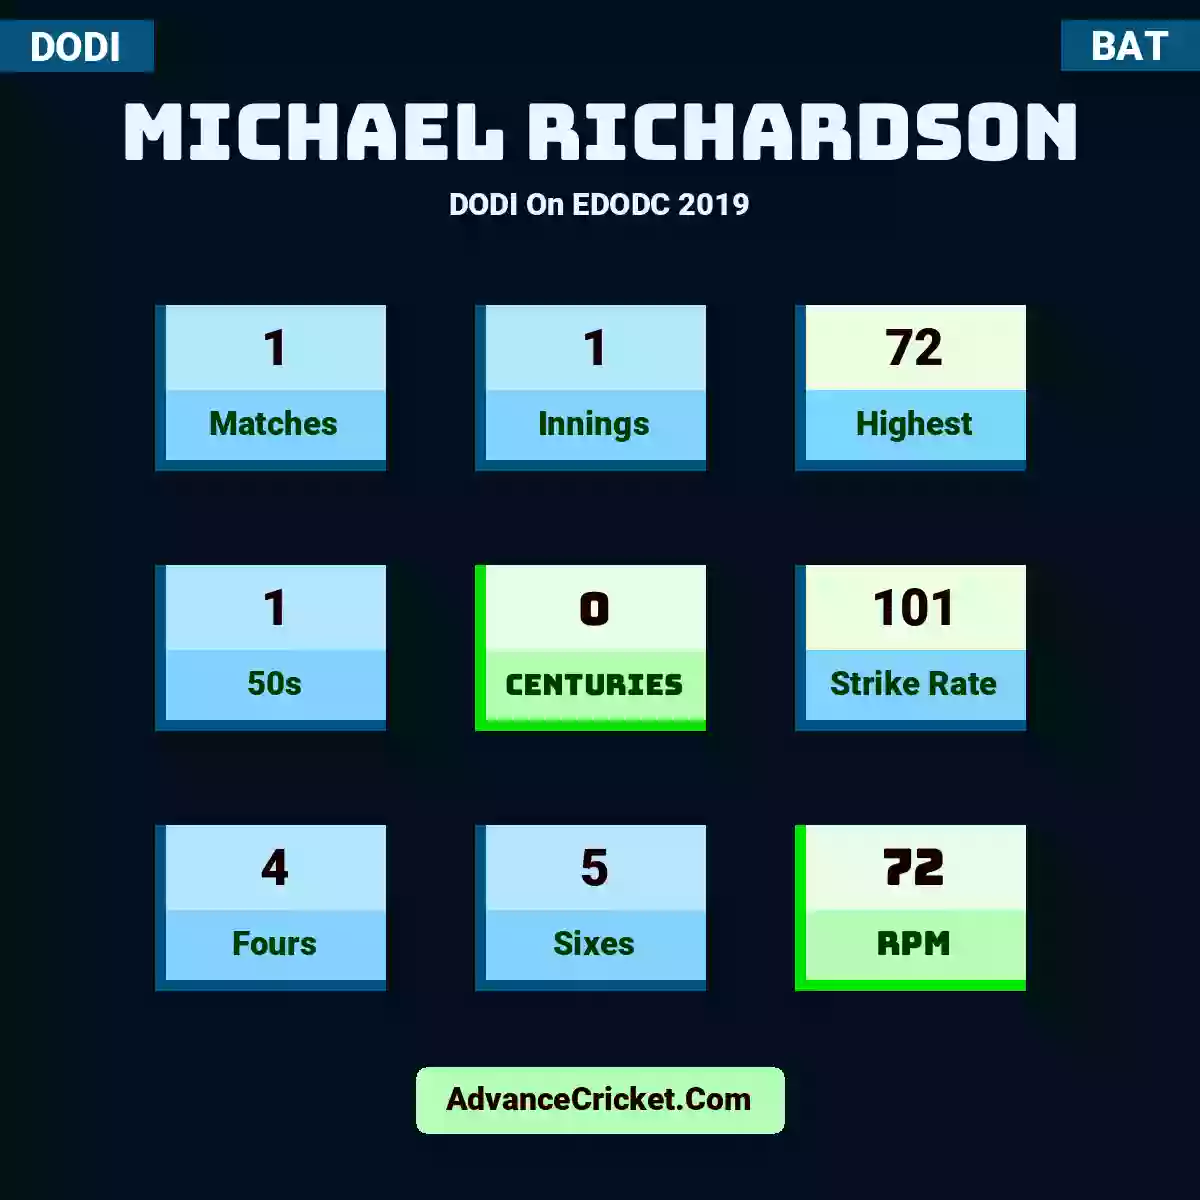 Michael Richardson DODI  On EDODC 2019, Michael Richardson played 1 matches, scored 72 runs as highest, 1 half-centuries, and 0 centuries, with a strike rate of 101. M.Richardson hit 4 fours and 5 sixes, with an RPM of 72.